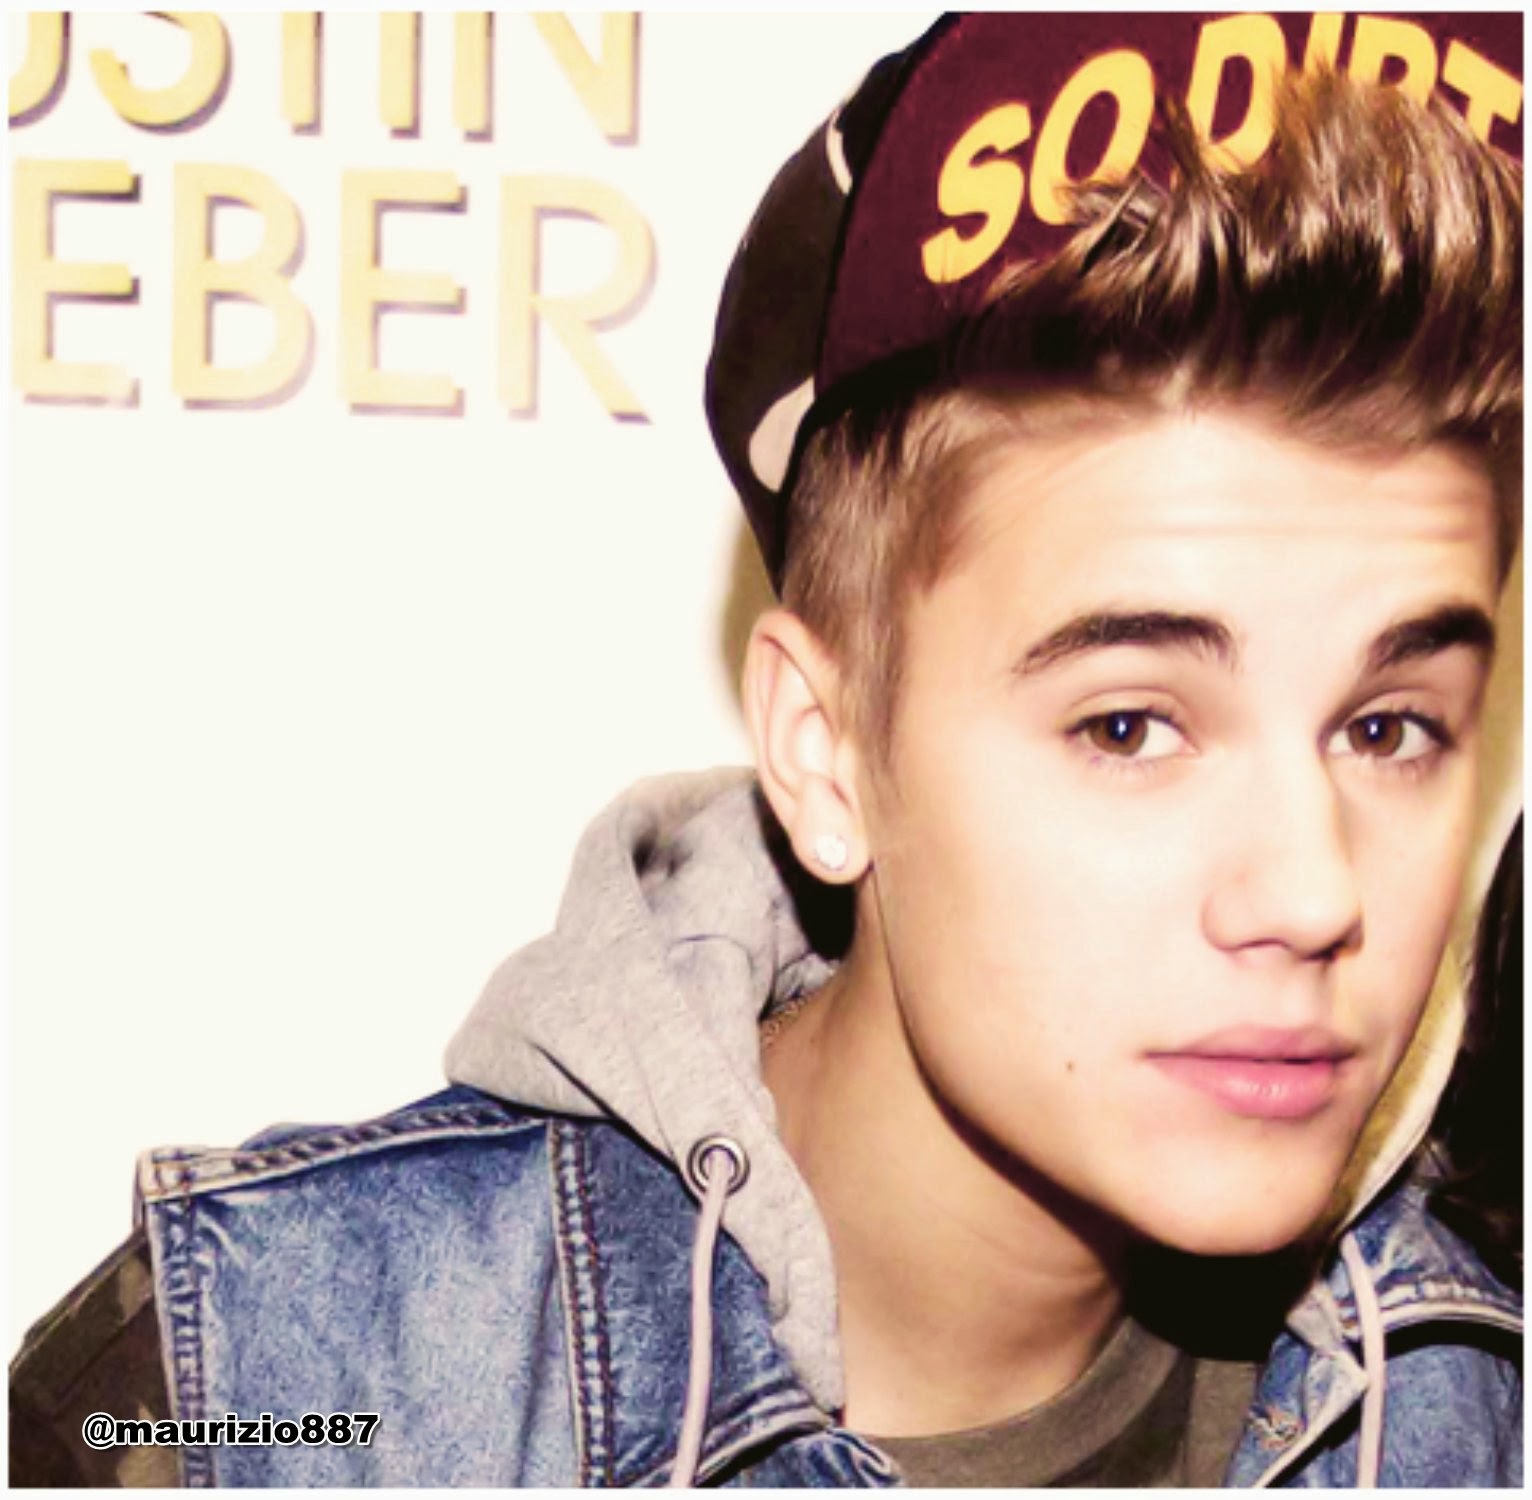 Justin Bieber - HD Wallpapers Blog1532 x 1500